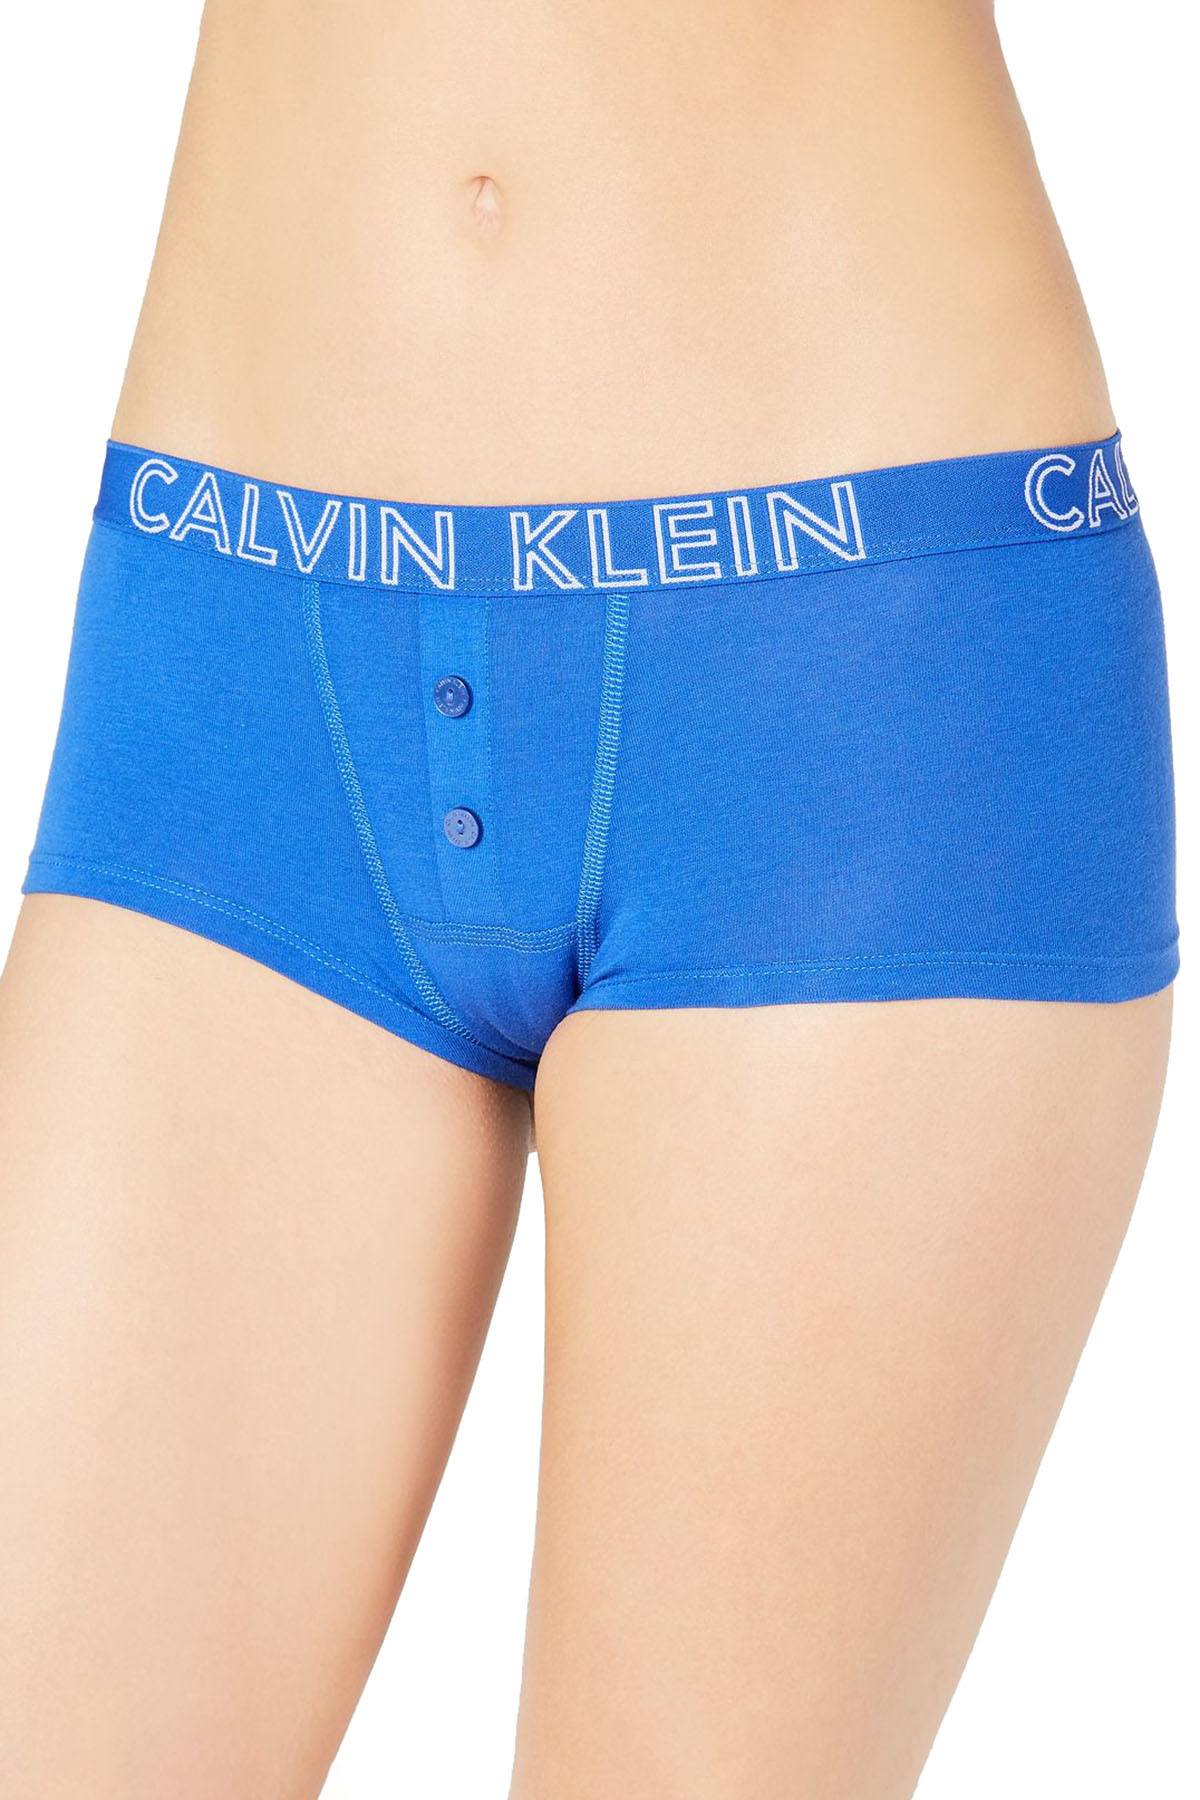 Calvin Klein CK Ultimate Cotton Boyshort in Stellar Blue